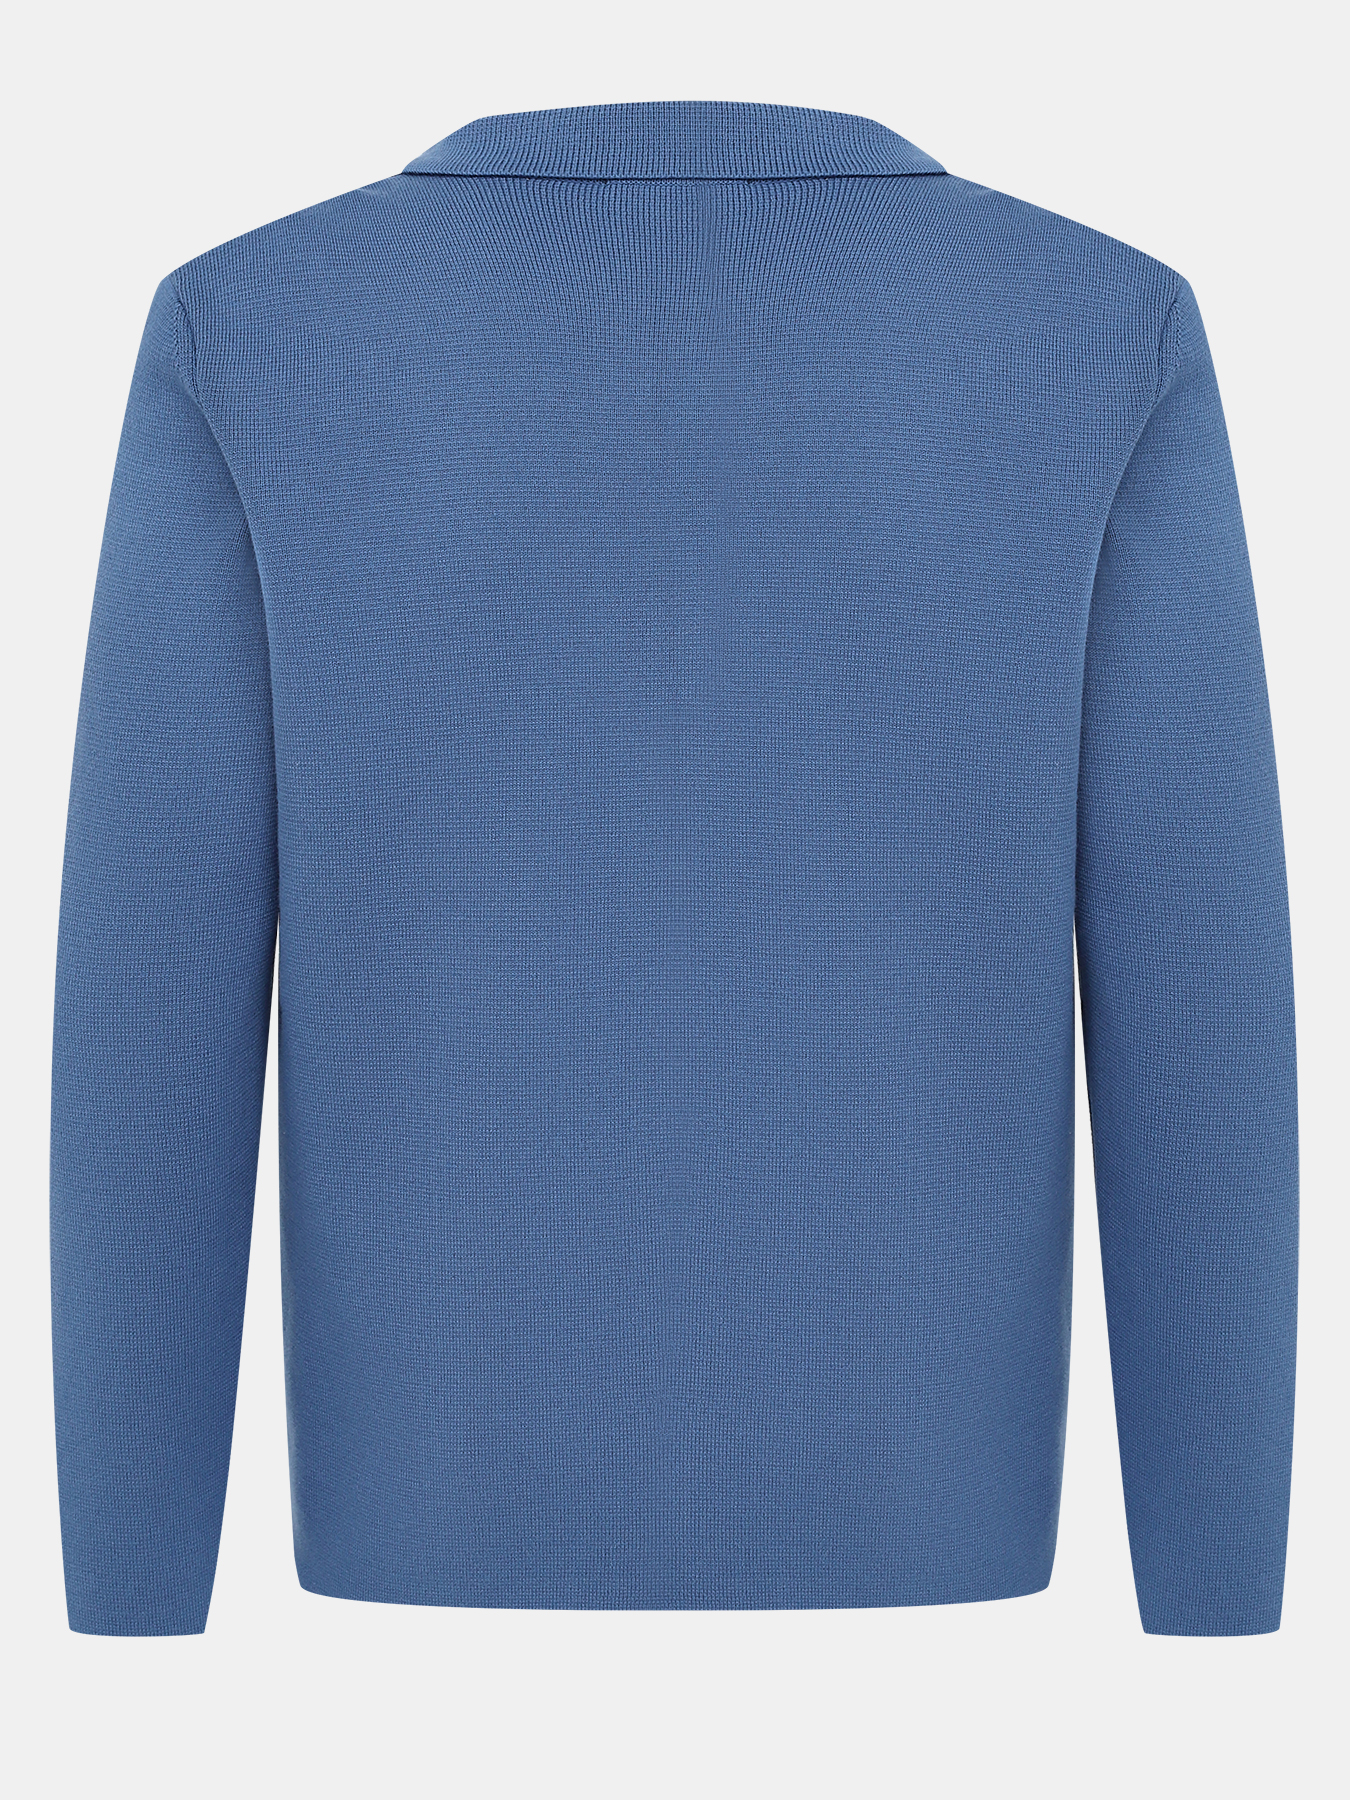 Пиджак Alessandro Manzoni 397142-029, цвет синий, размер 56 - фото 3